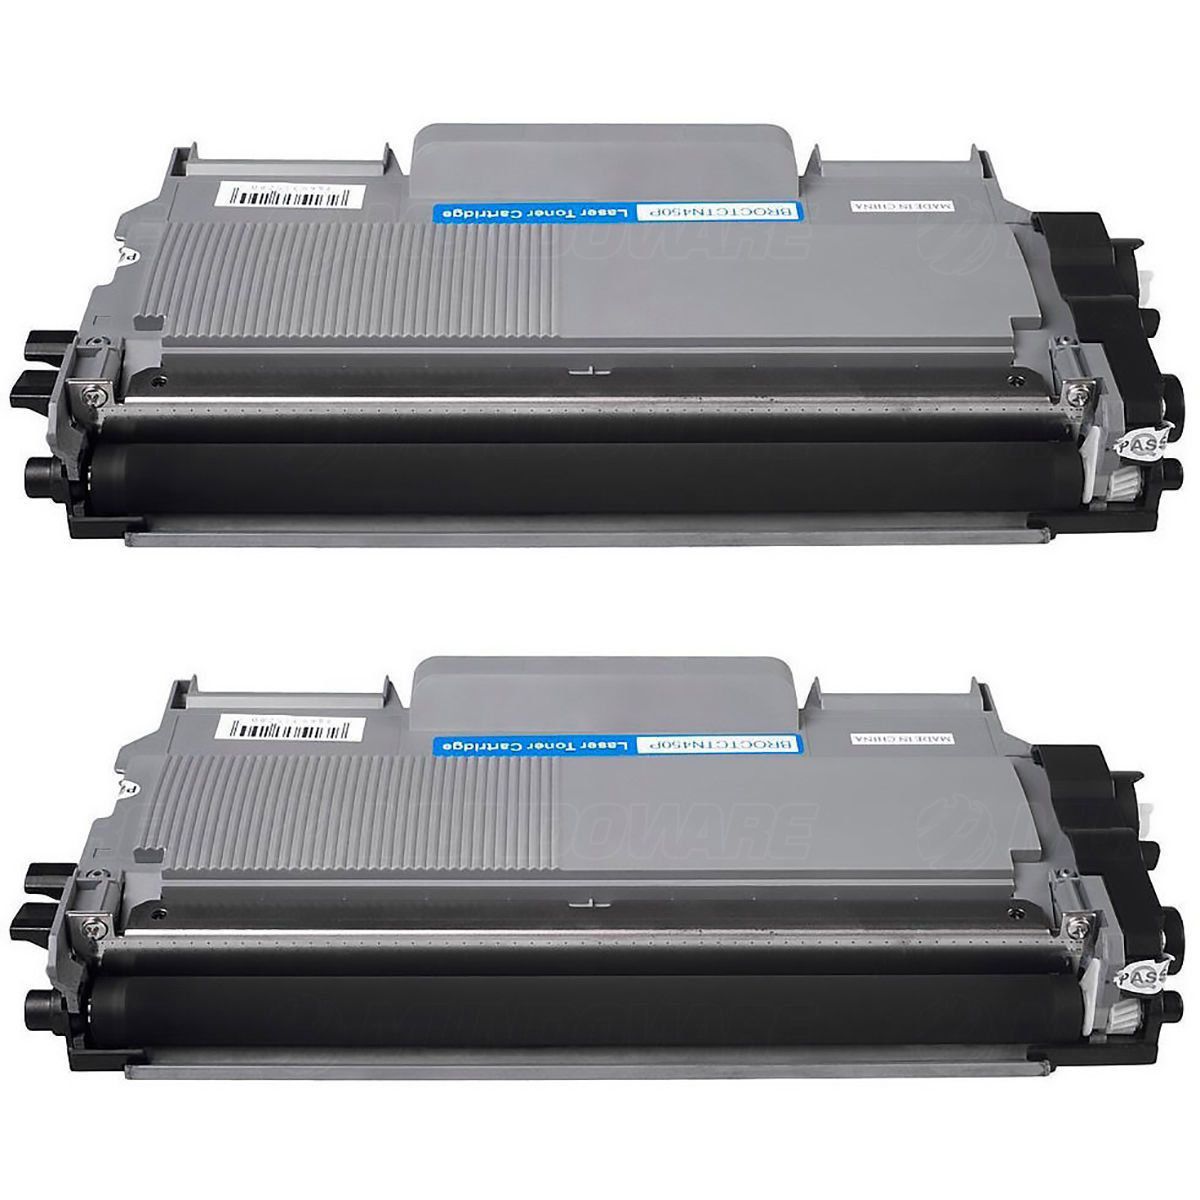 Kit 2x Toner Compatível com TN450 TN420 TN410 para Brother HL-2130 HL-2132 DCP-7055 DCP-7060 DCP-7065 Preto 2.600